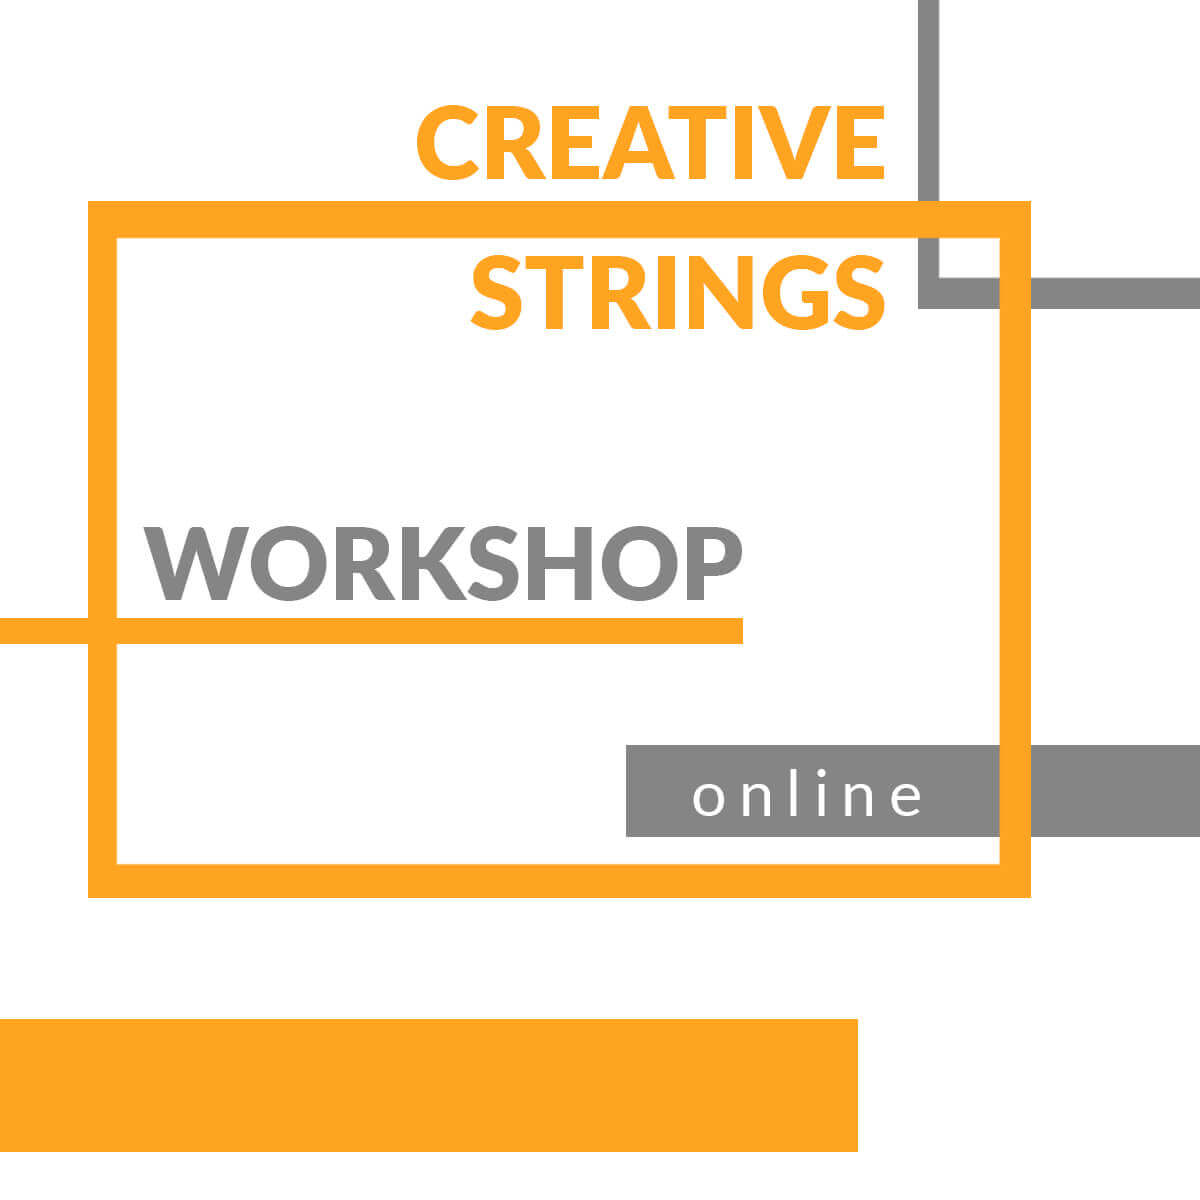 Teachers Access + 30 Students - Creative Strings Workshop Online